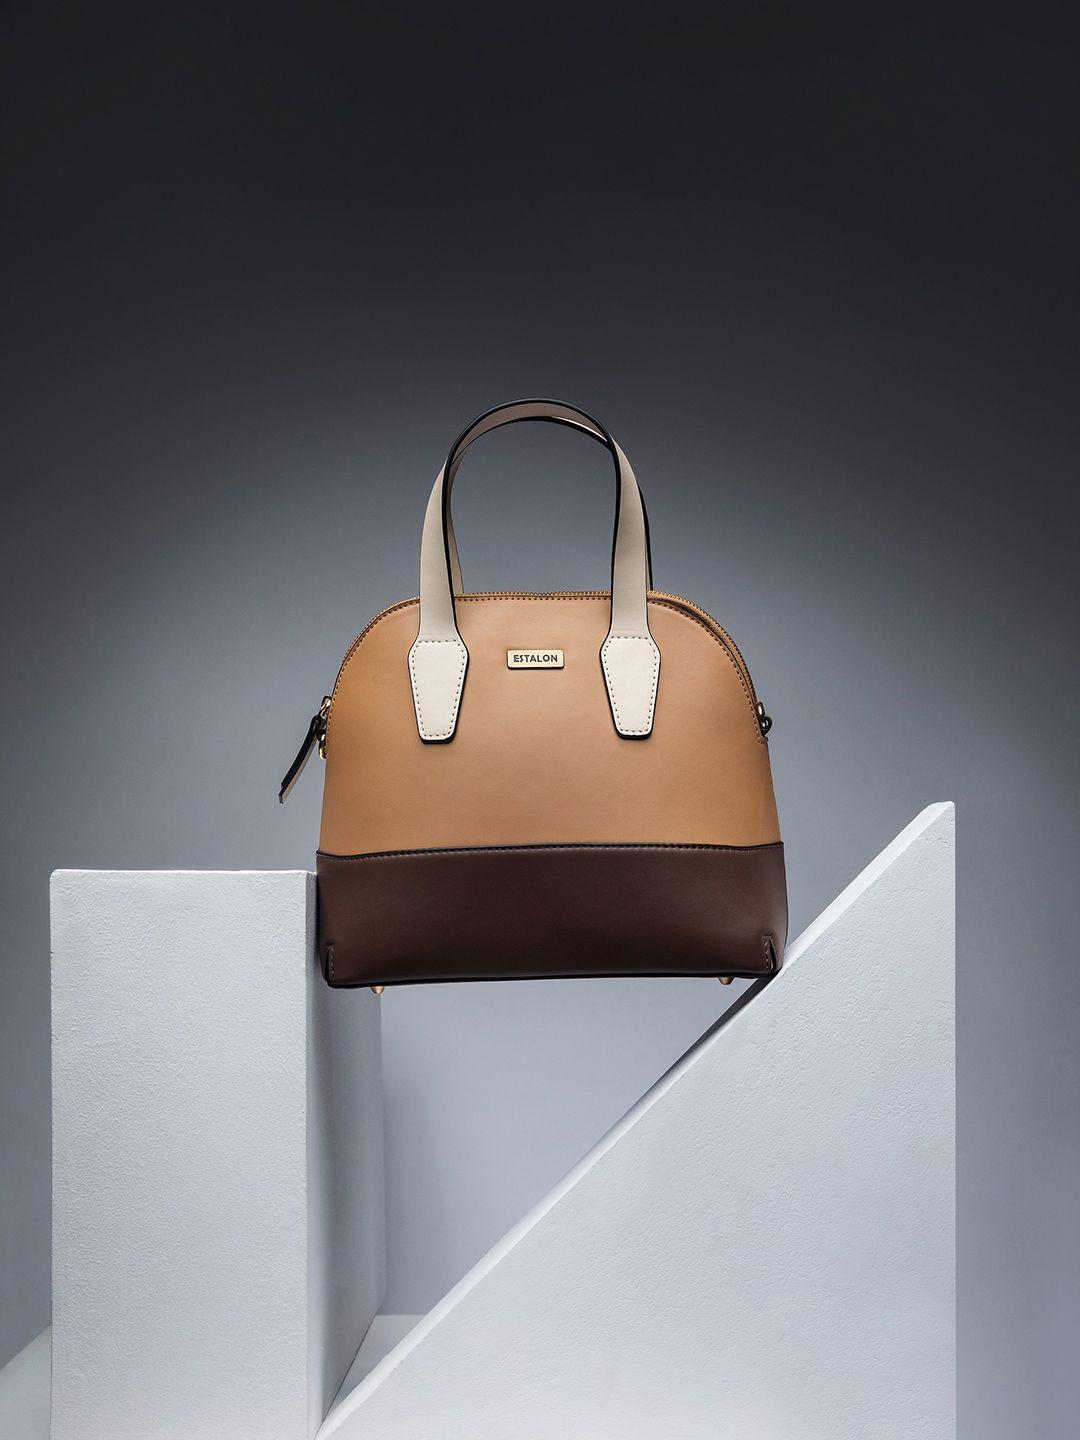 estalon beige & brown colourblocked structured handheld bag